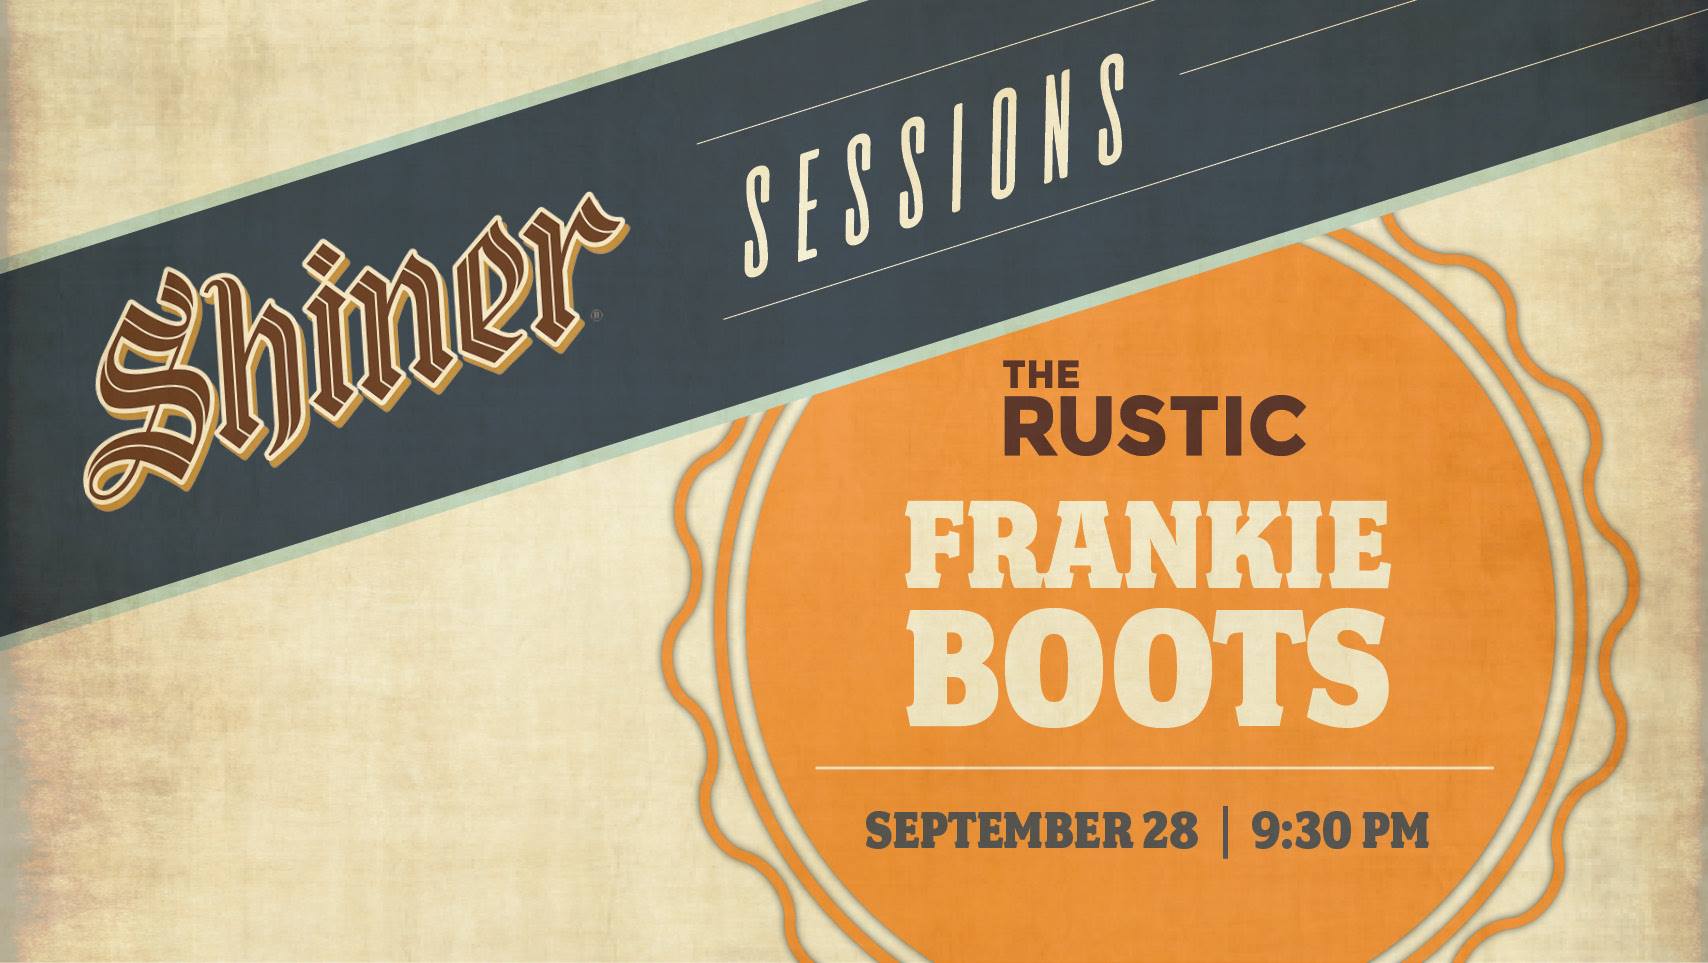 The Rustic Dallas Logo - Shiner Sessions: Frankie Boots The Rustic, Dallas 28